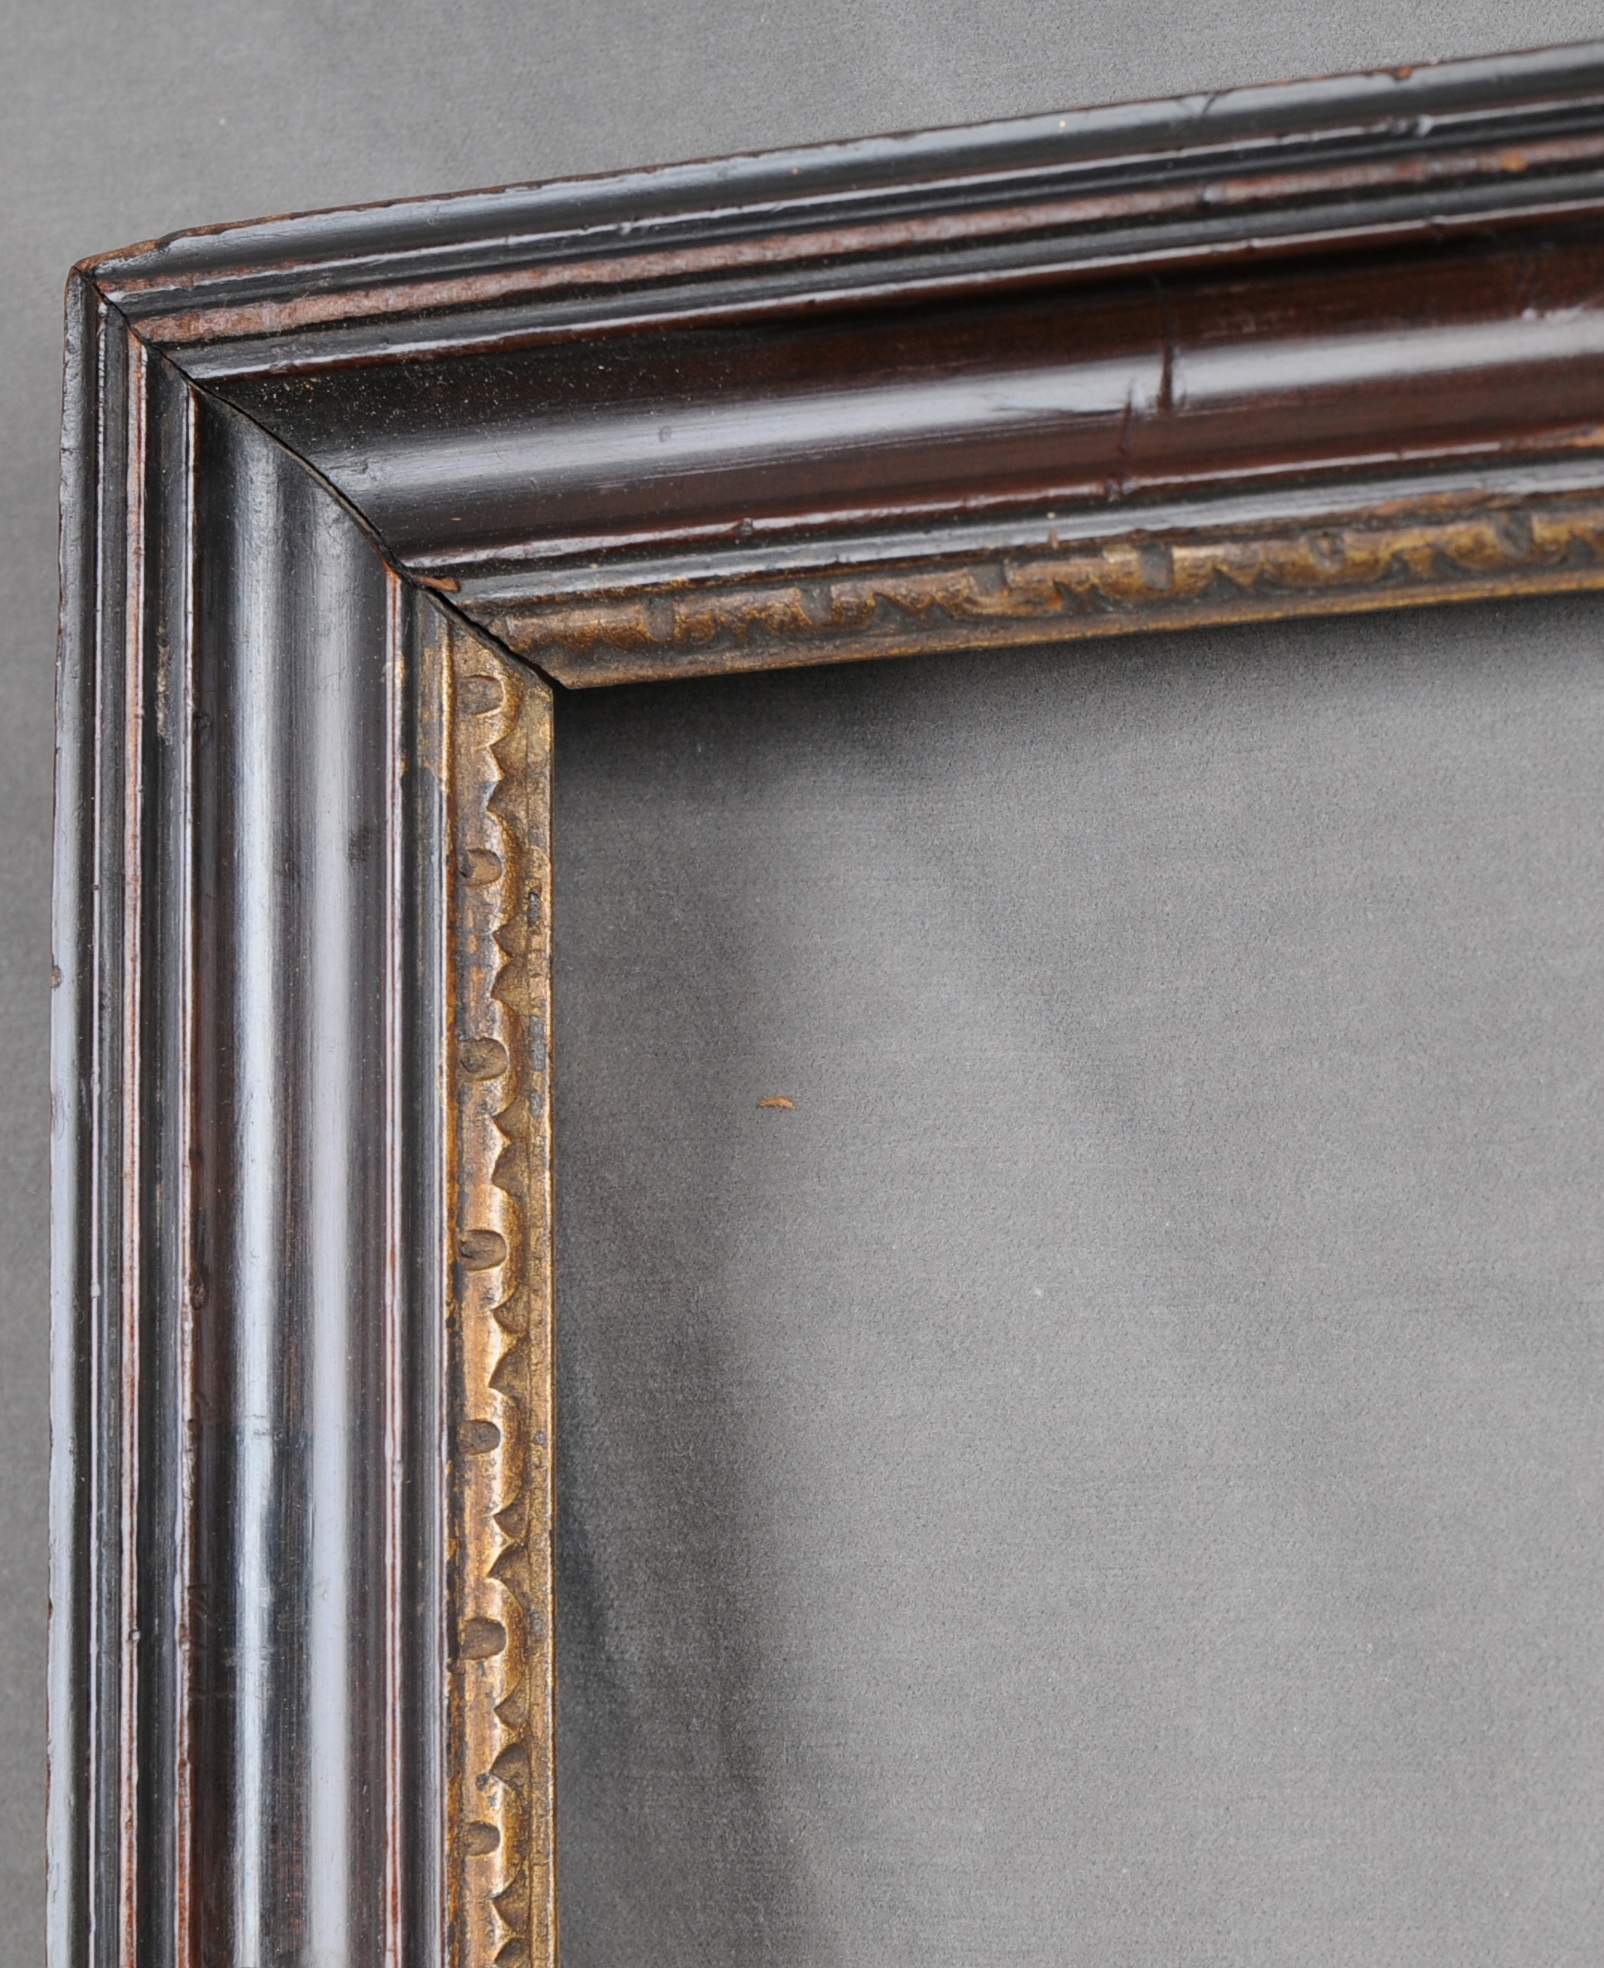 Eighteenth century Darling & Thompson Peartree frame corner detail